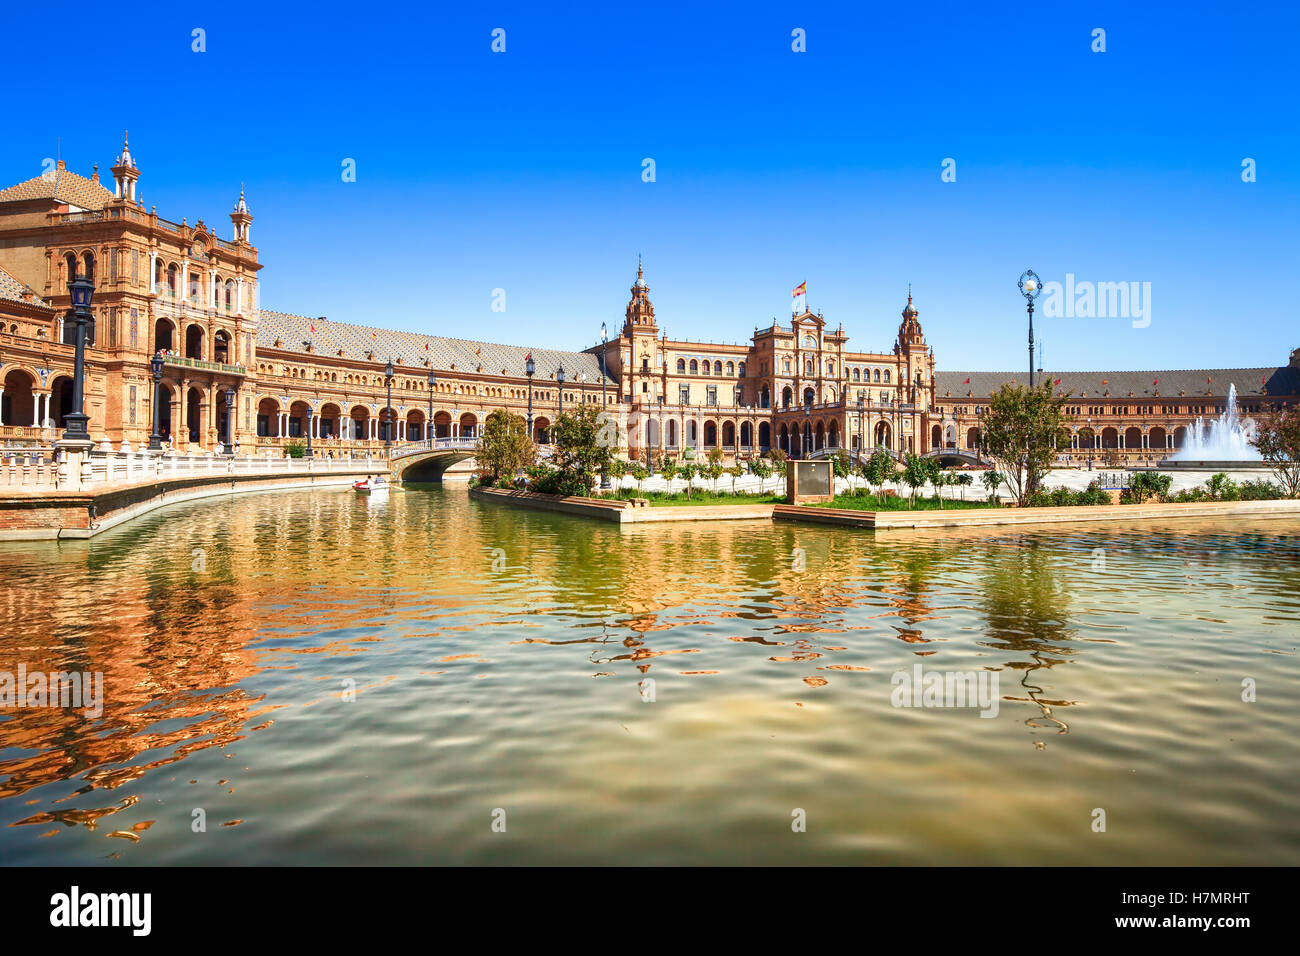 Plaza de Espana (Spanien Platz) Sevilla, Andalusien, Spanien, Europa. Traditionelle Brücke Detail. Stockfoto